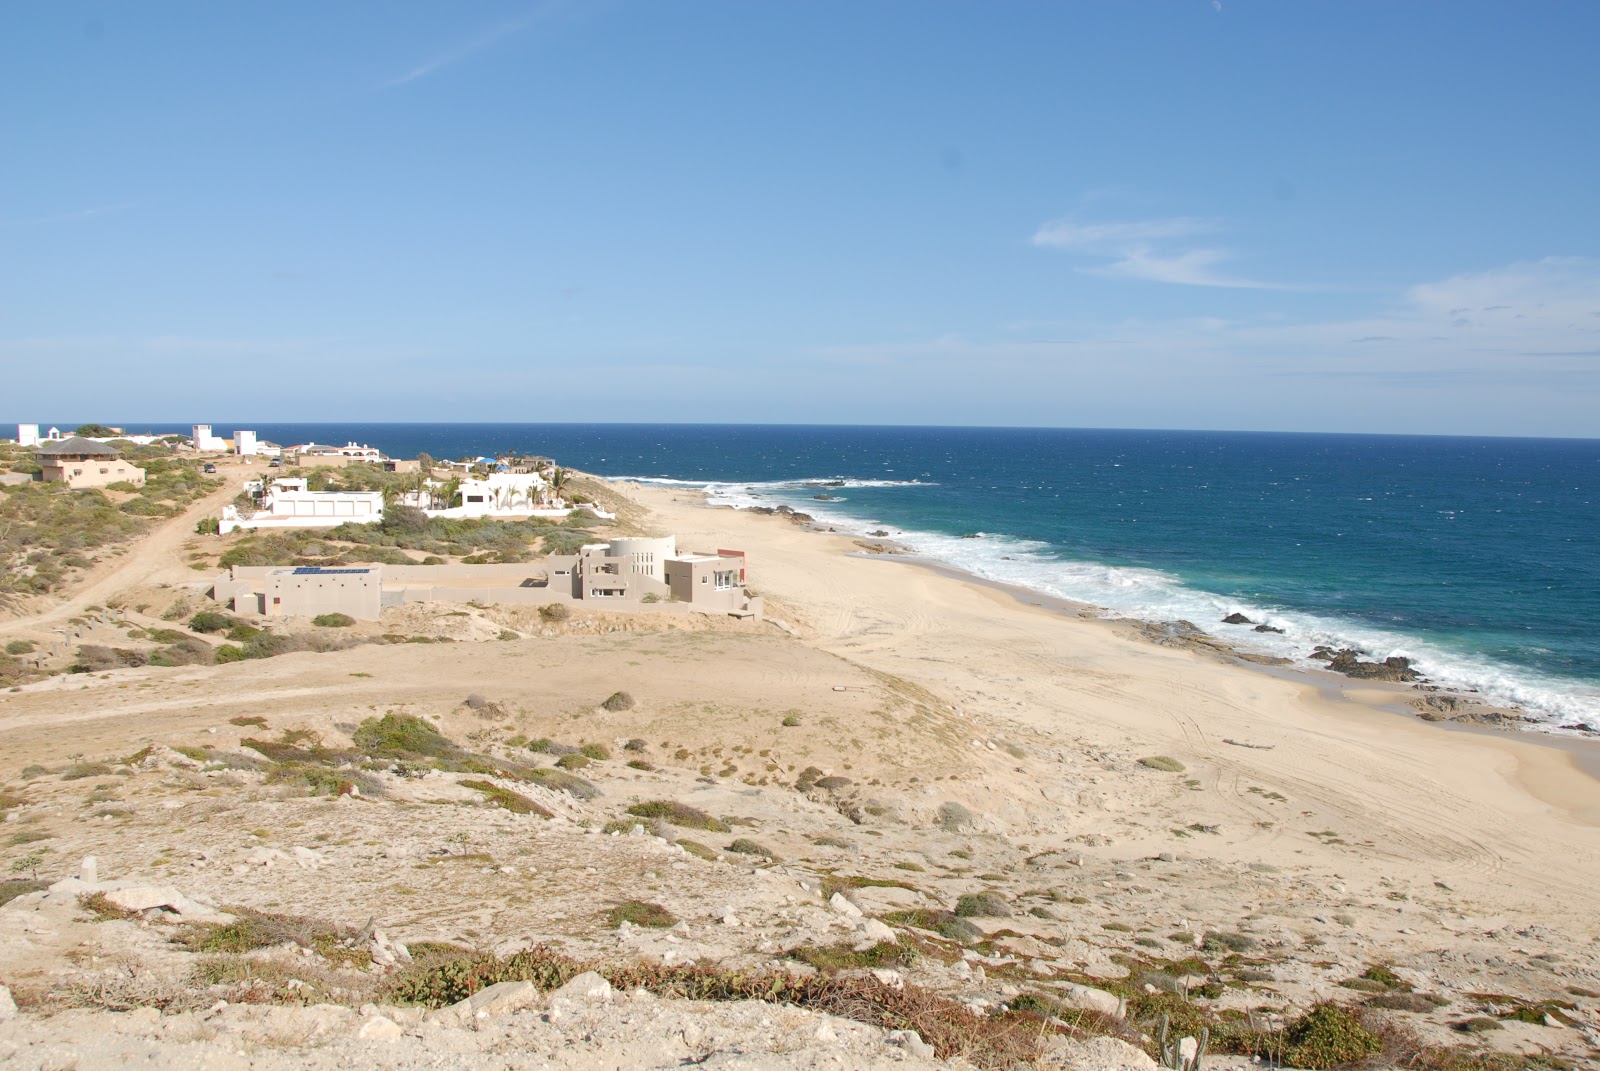 Foto di Playa Los Zacatitos con una superficie del sabbia fine e luminosa